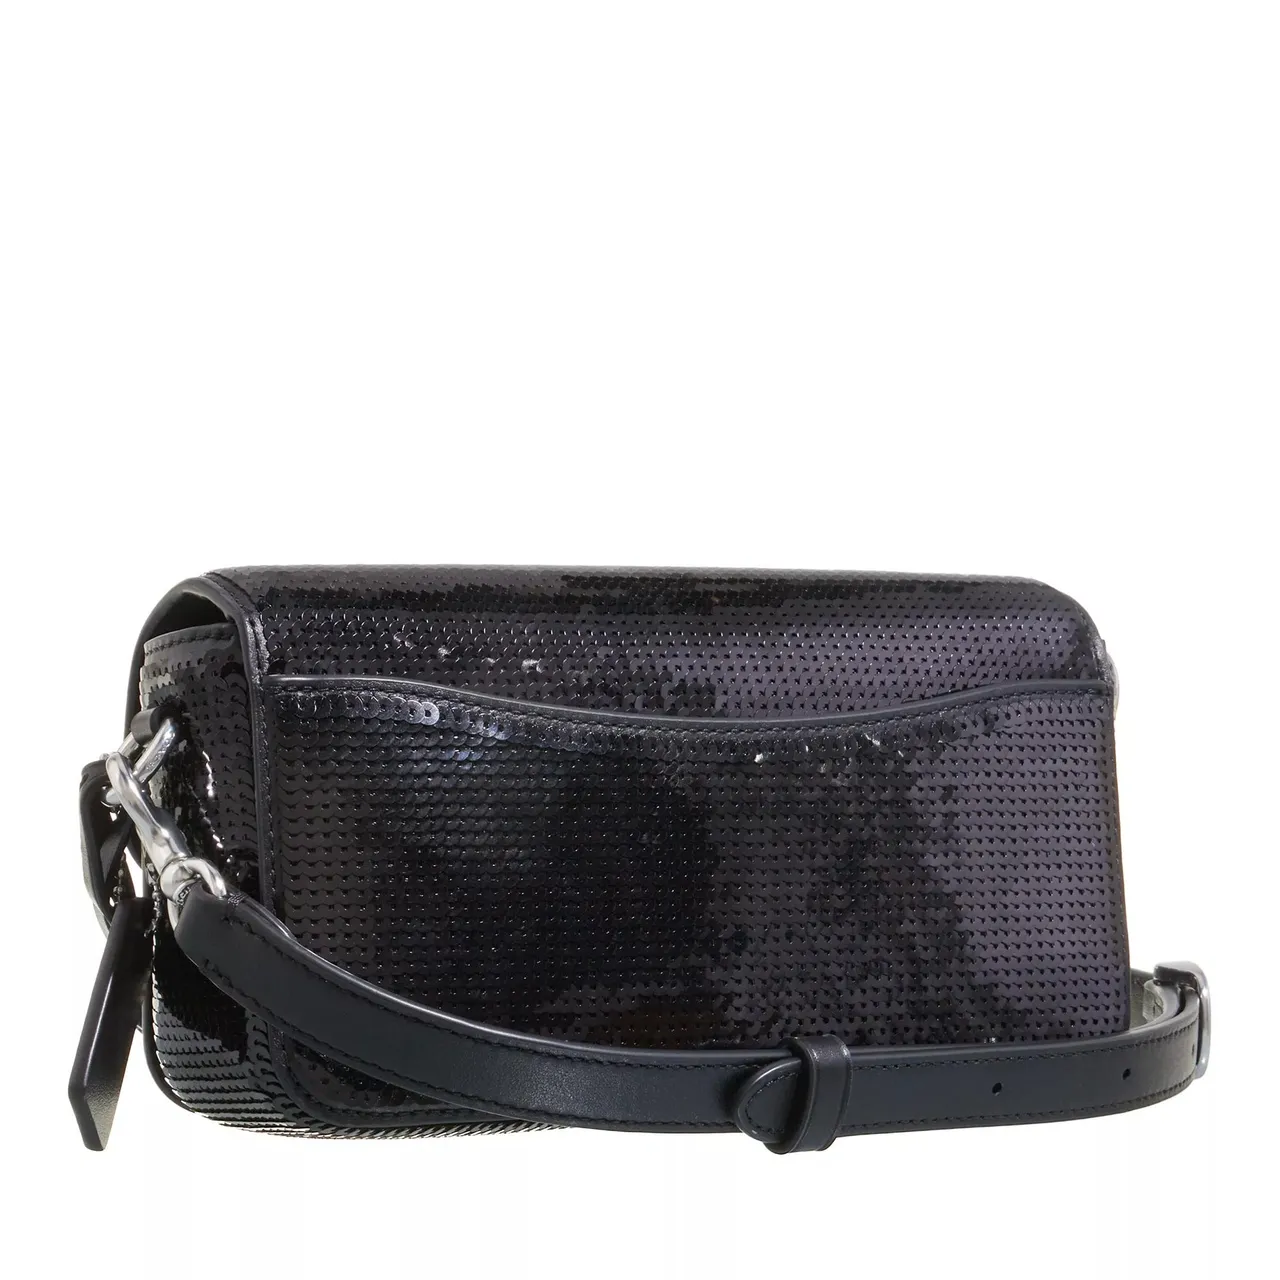 Coach Crossbody Bags - Sequin Studio Shoulder Bag - black - Crossbody Bags for ladies